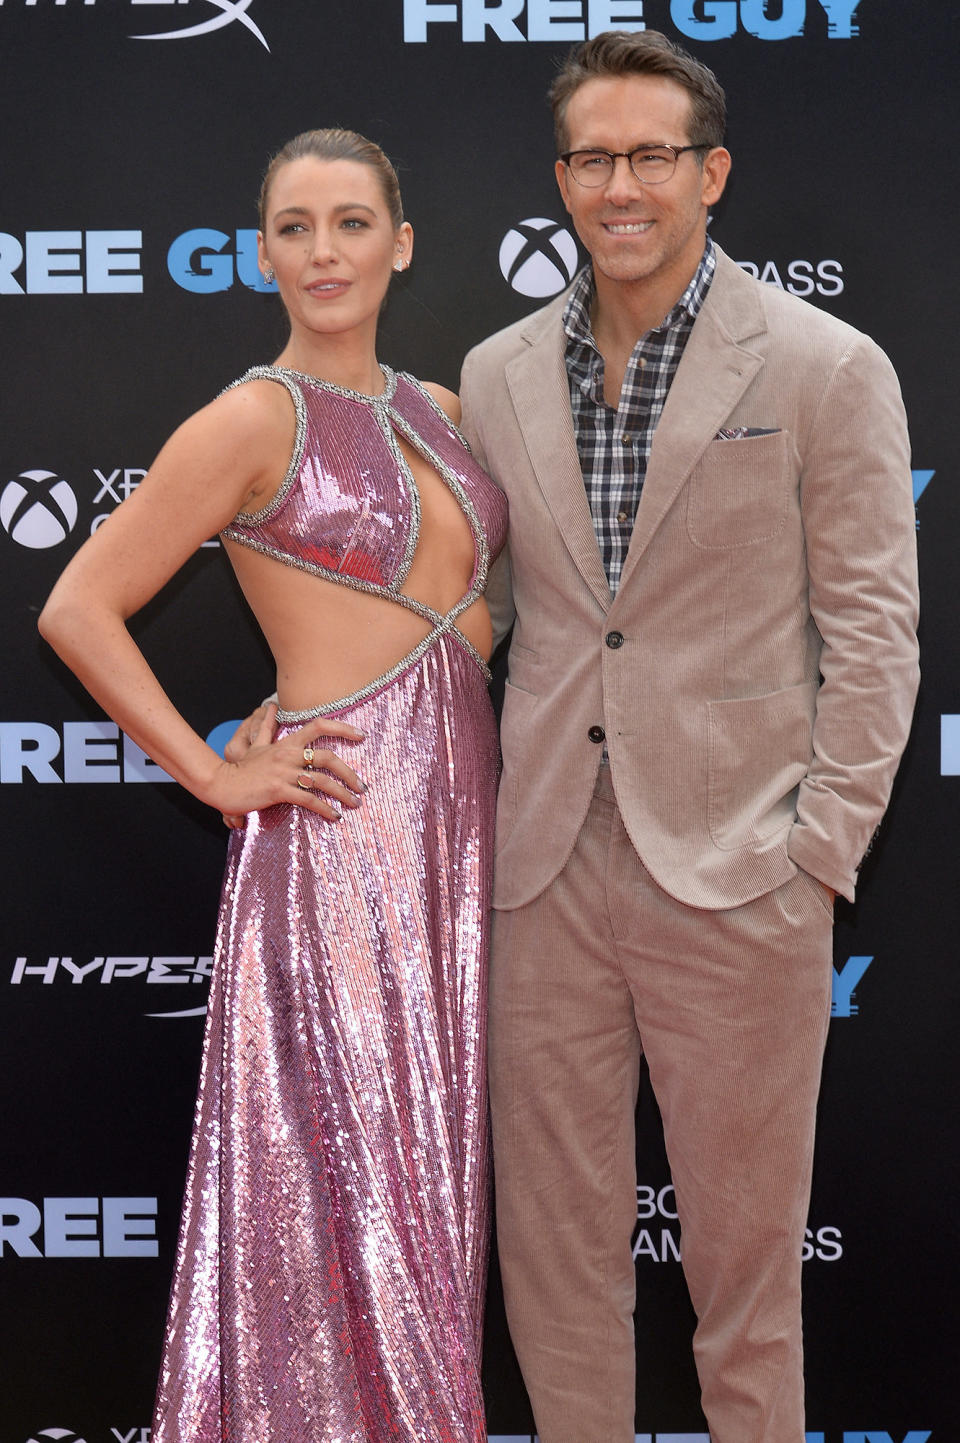 Blake Lively ravissante en robe de sequins roses au bras de Ryan Reynolds